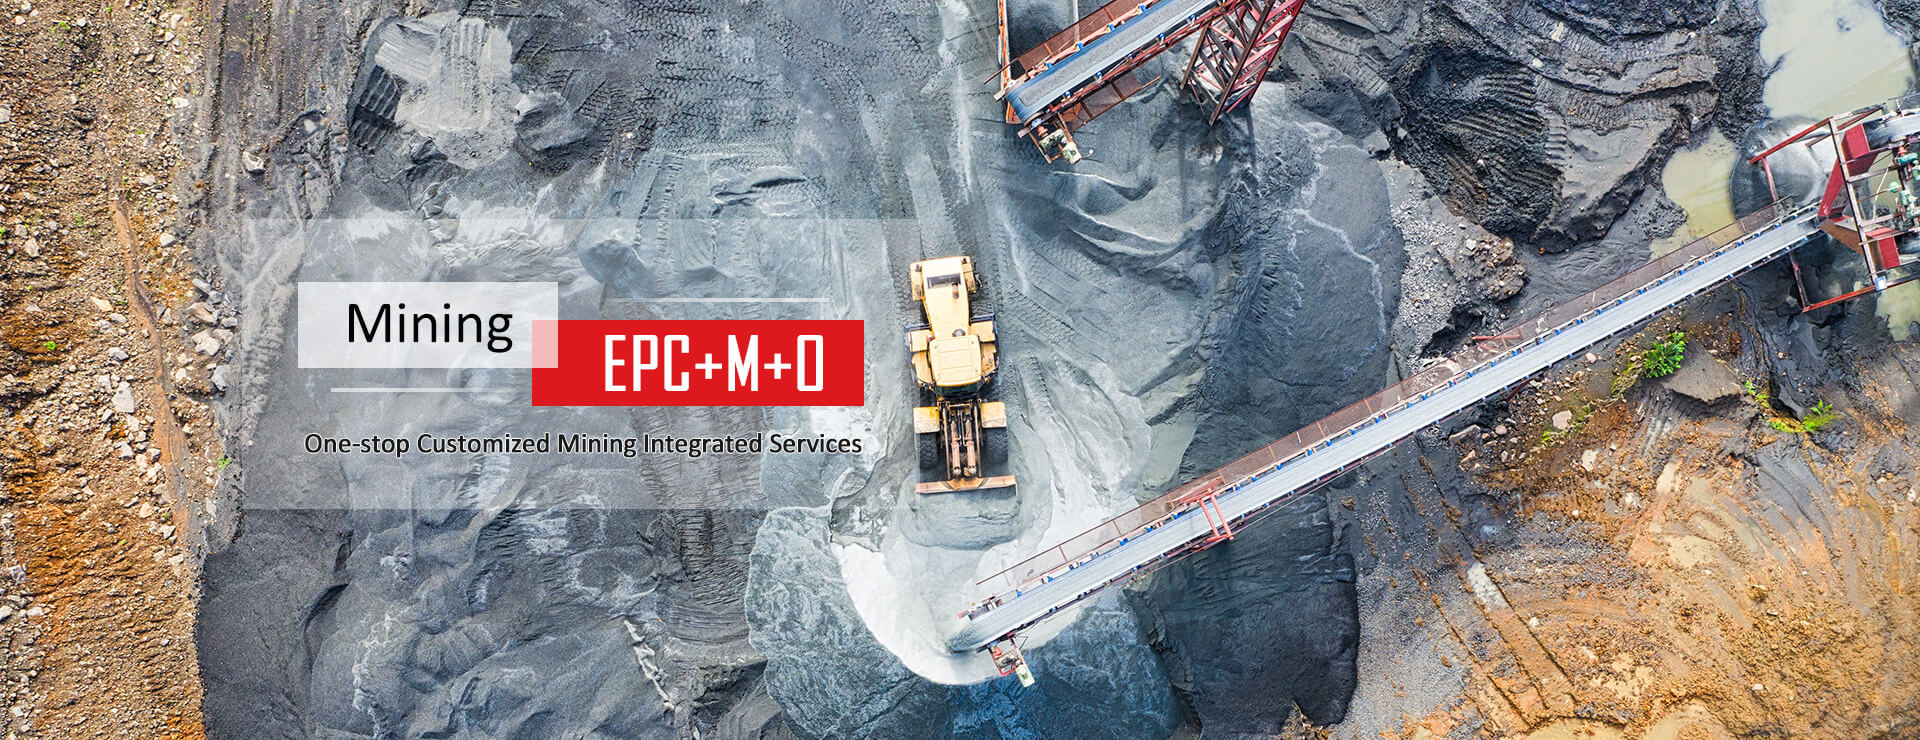 Mining EPC+M+O